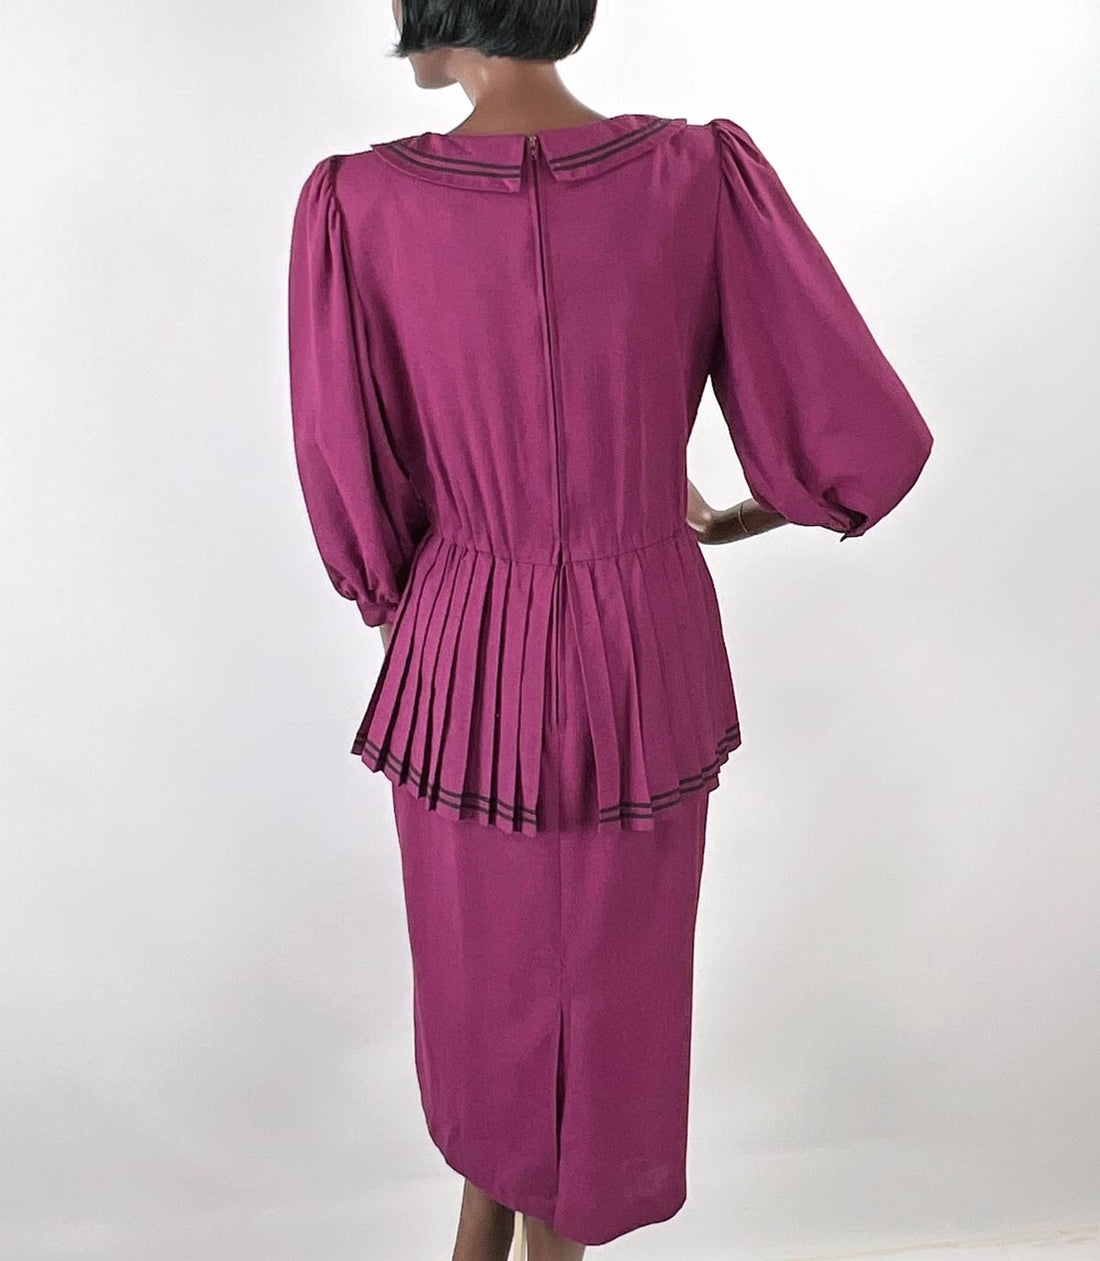 80s 90s Purple Peplum Vintage Dress 20s Middy Sailor Inspired Medium Sabino VFG